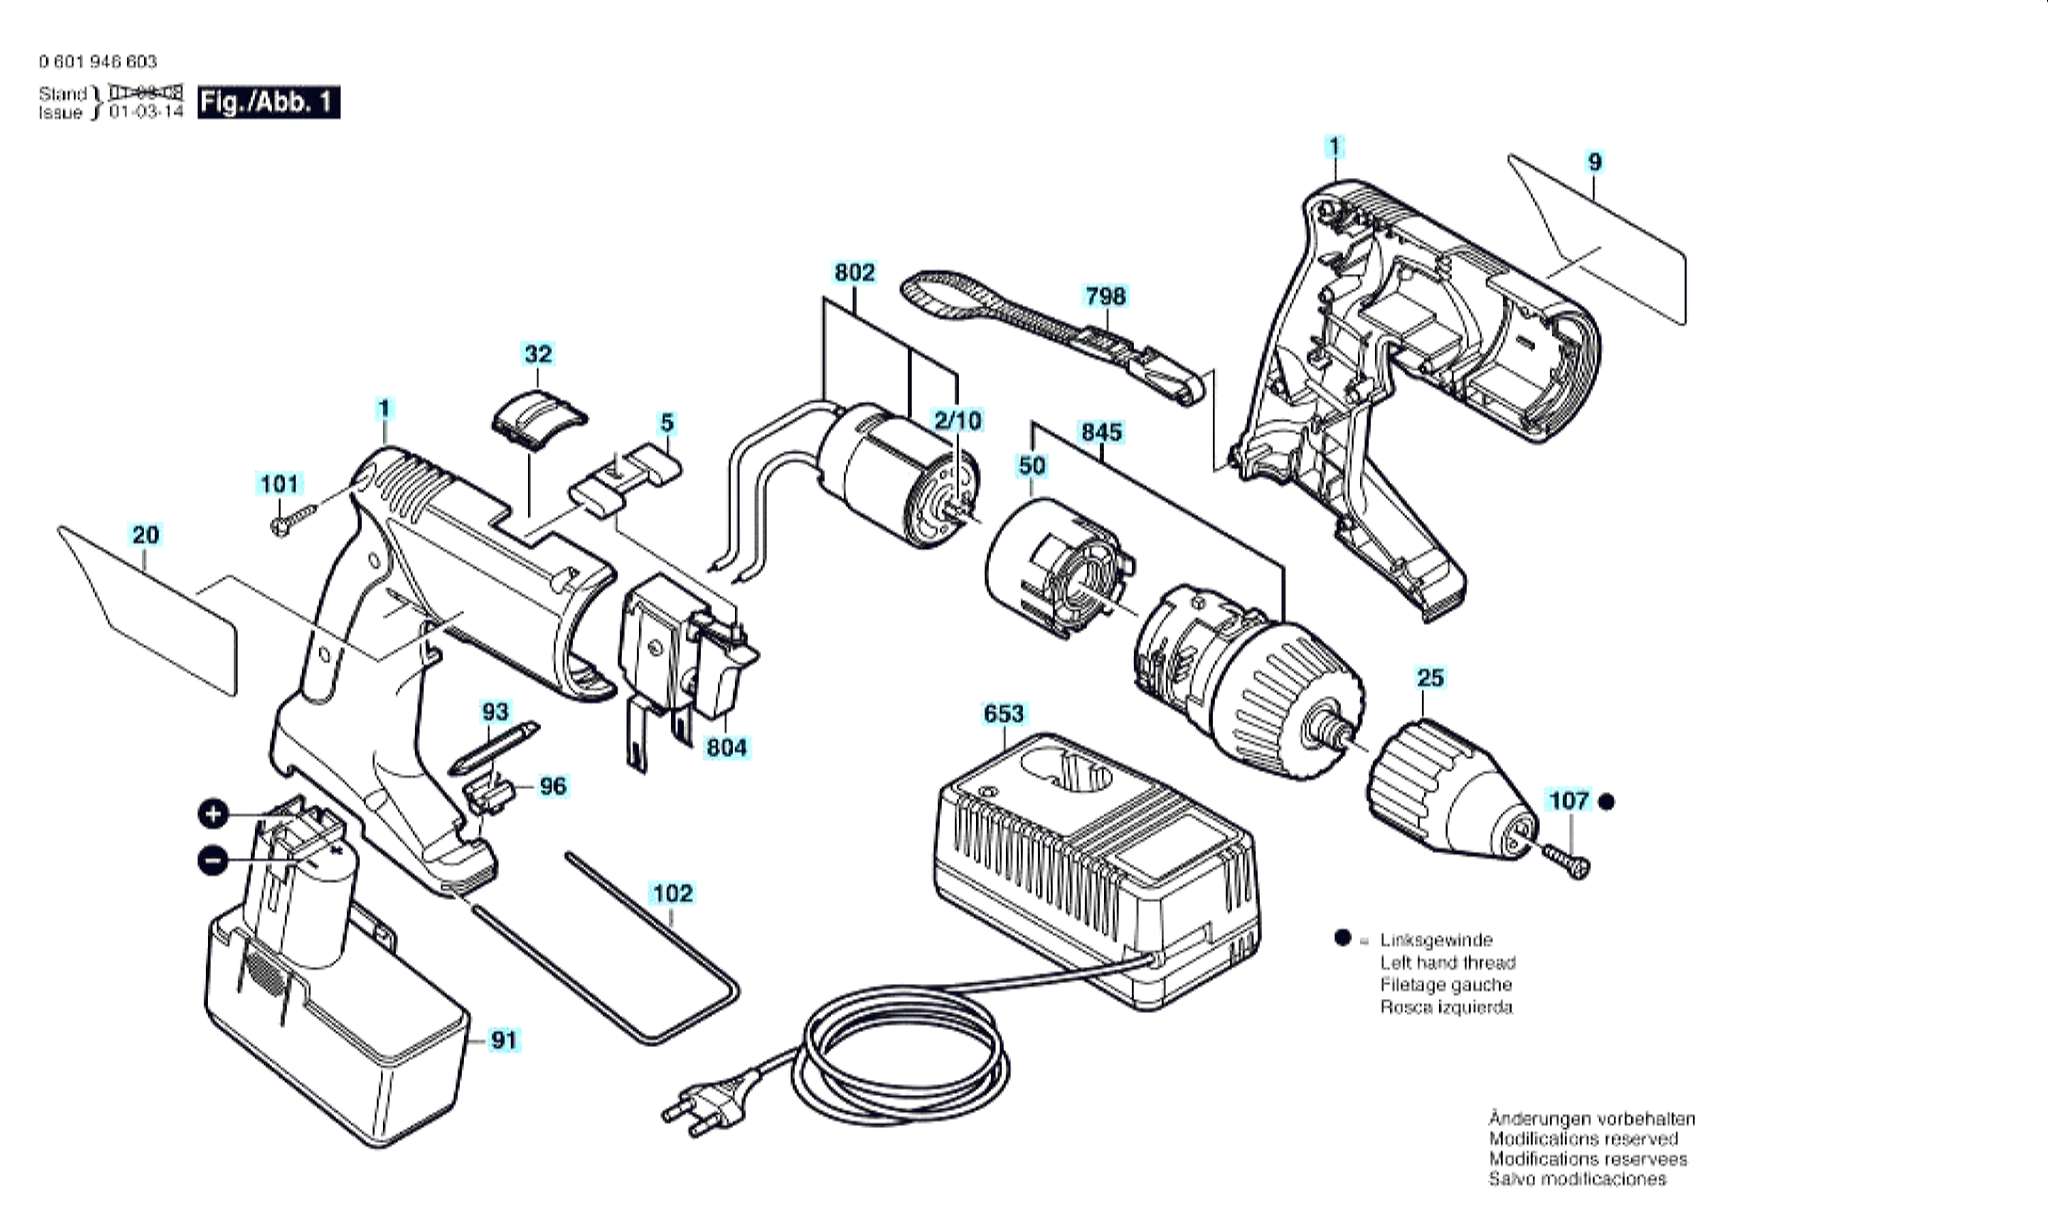 Запчасти, схема и деталировка Bosch GSR 12 VPE-2 (ТИП 0601946580)